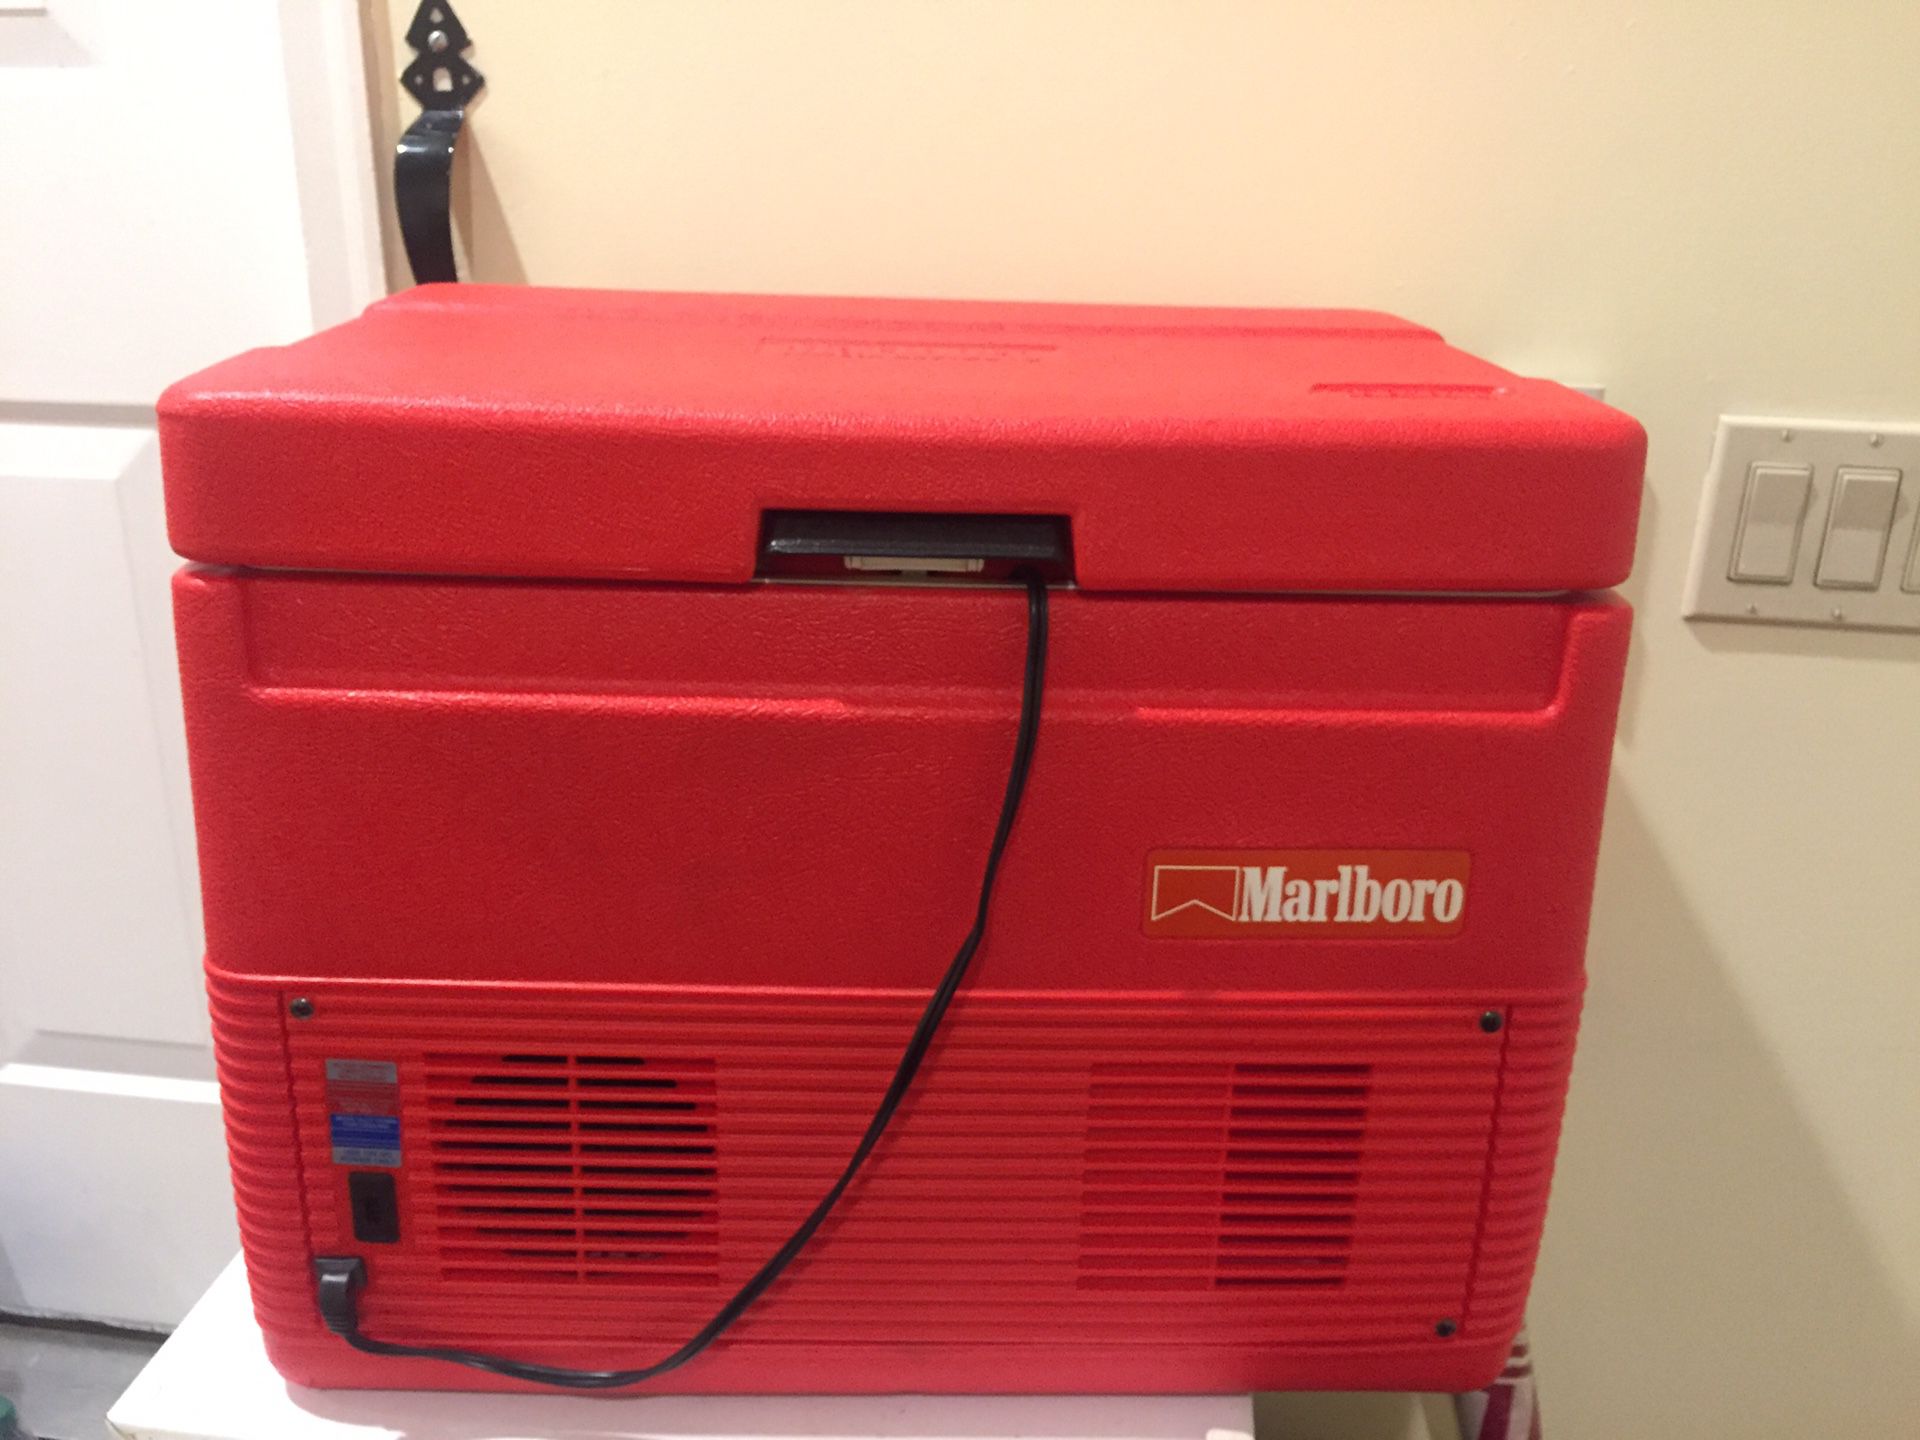 Brand new vintage Marlboro electrical cooler